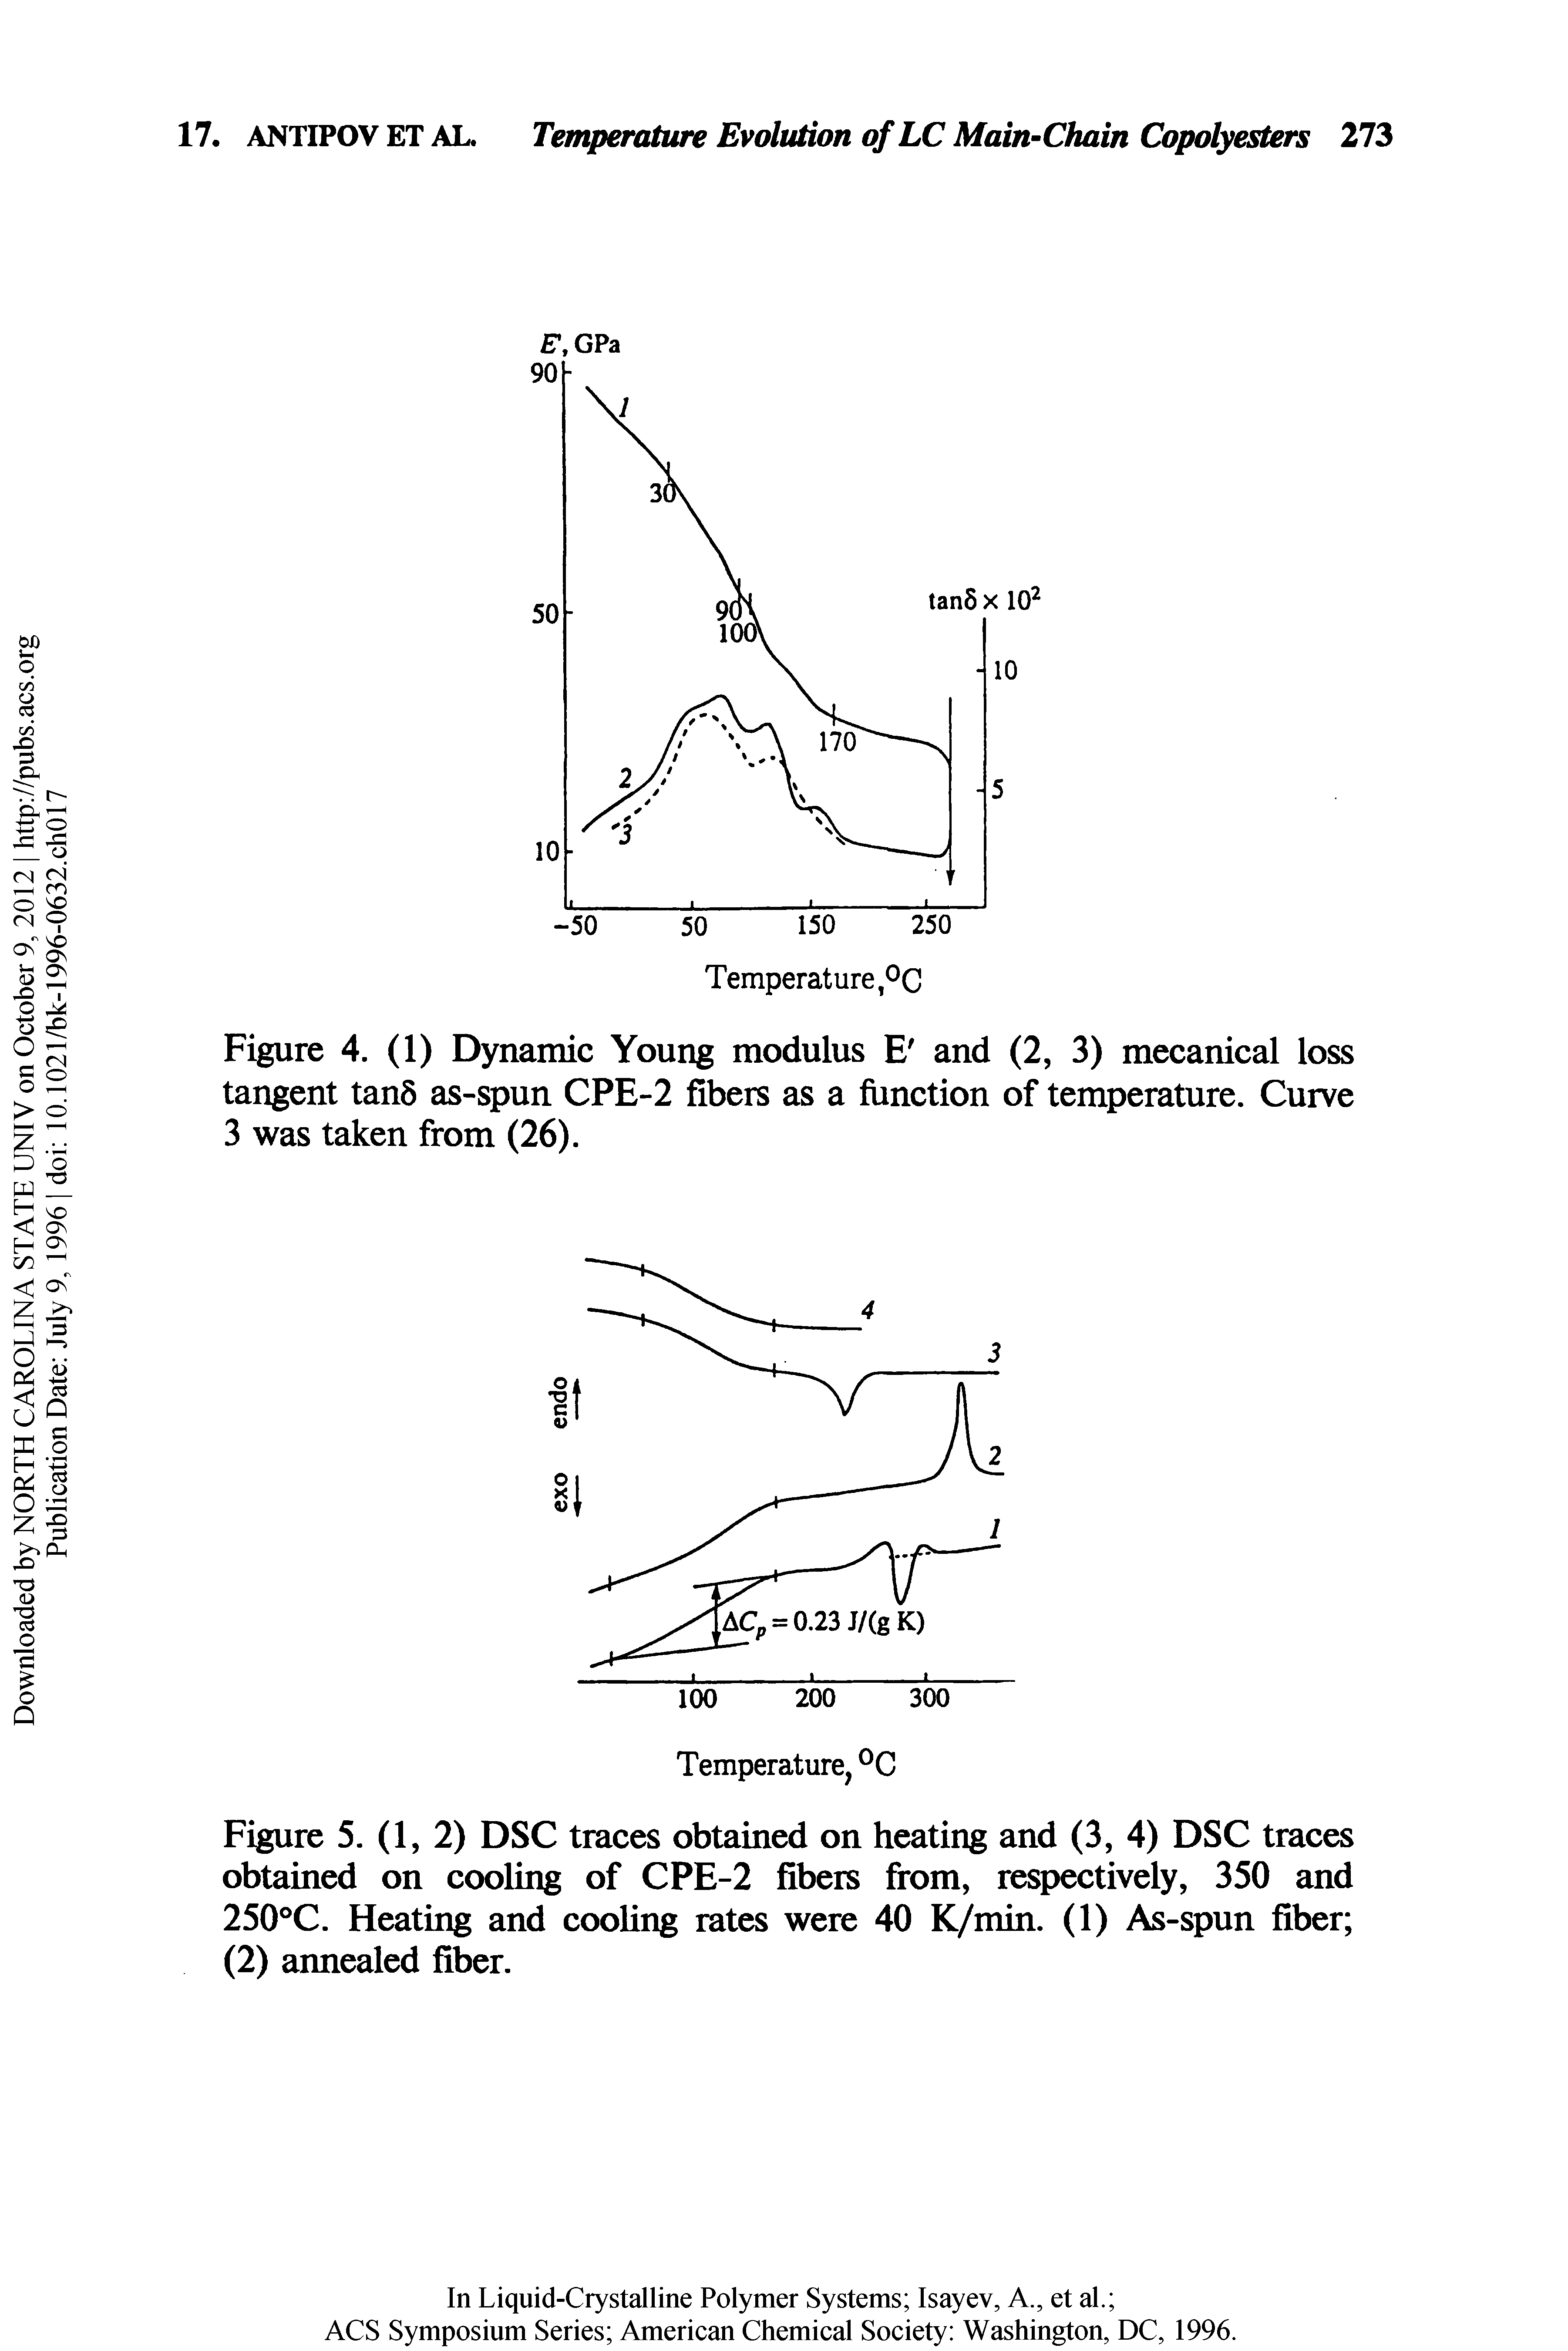 Figure 5. (1, 2) DSC traces obtained on heating and (3, 4) DSC traces obtained on cooling of CPE-2 fibers fi om, respectively, 350 and 250°C. Heating and cooling rates were 40 K/min. (1) As-spun fiber (2) annealed fiber.